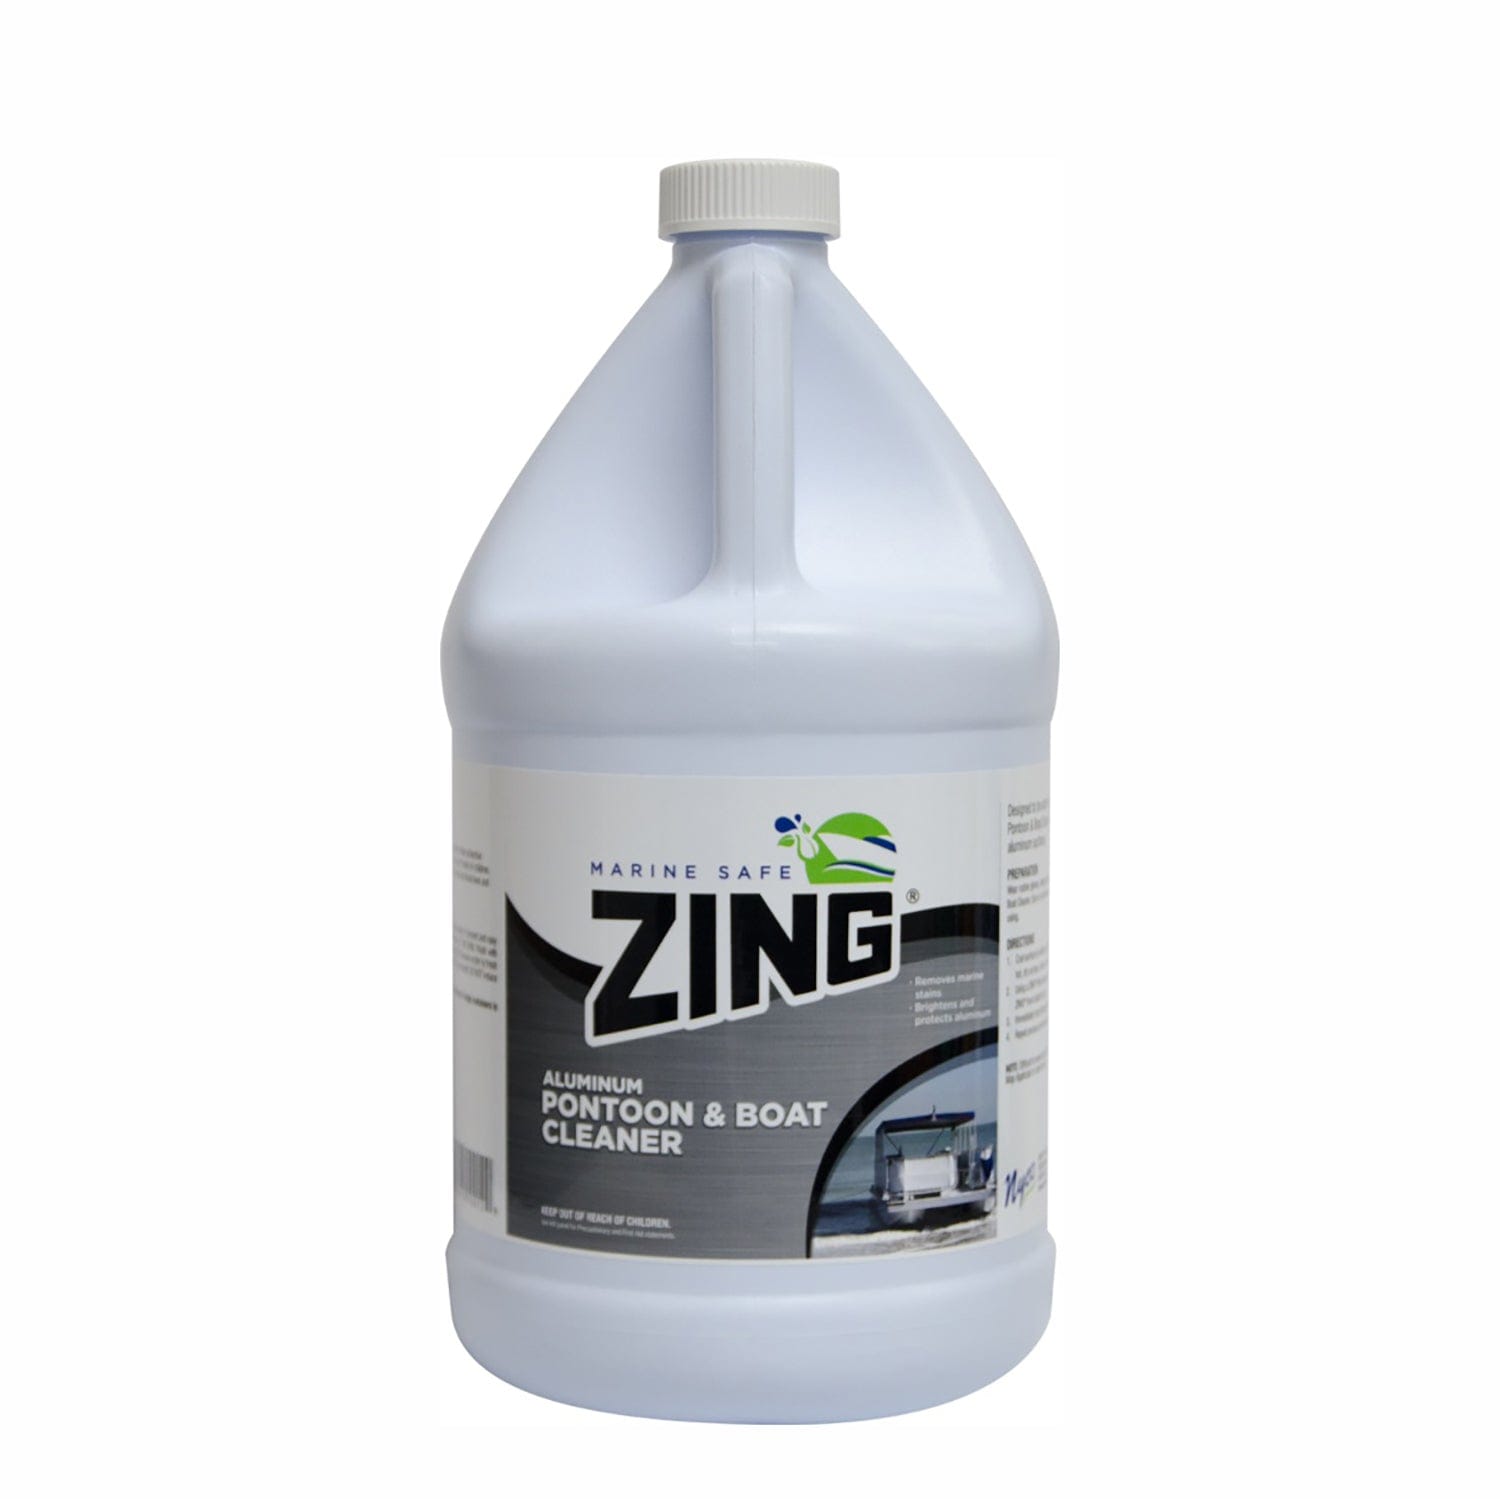 Zing Z809-G4 Marine Safe Aluminum Boat/Pontoon Cleaner, Clear - 1 Gallon